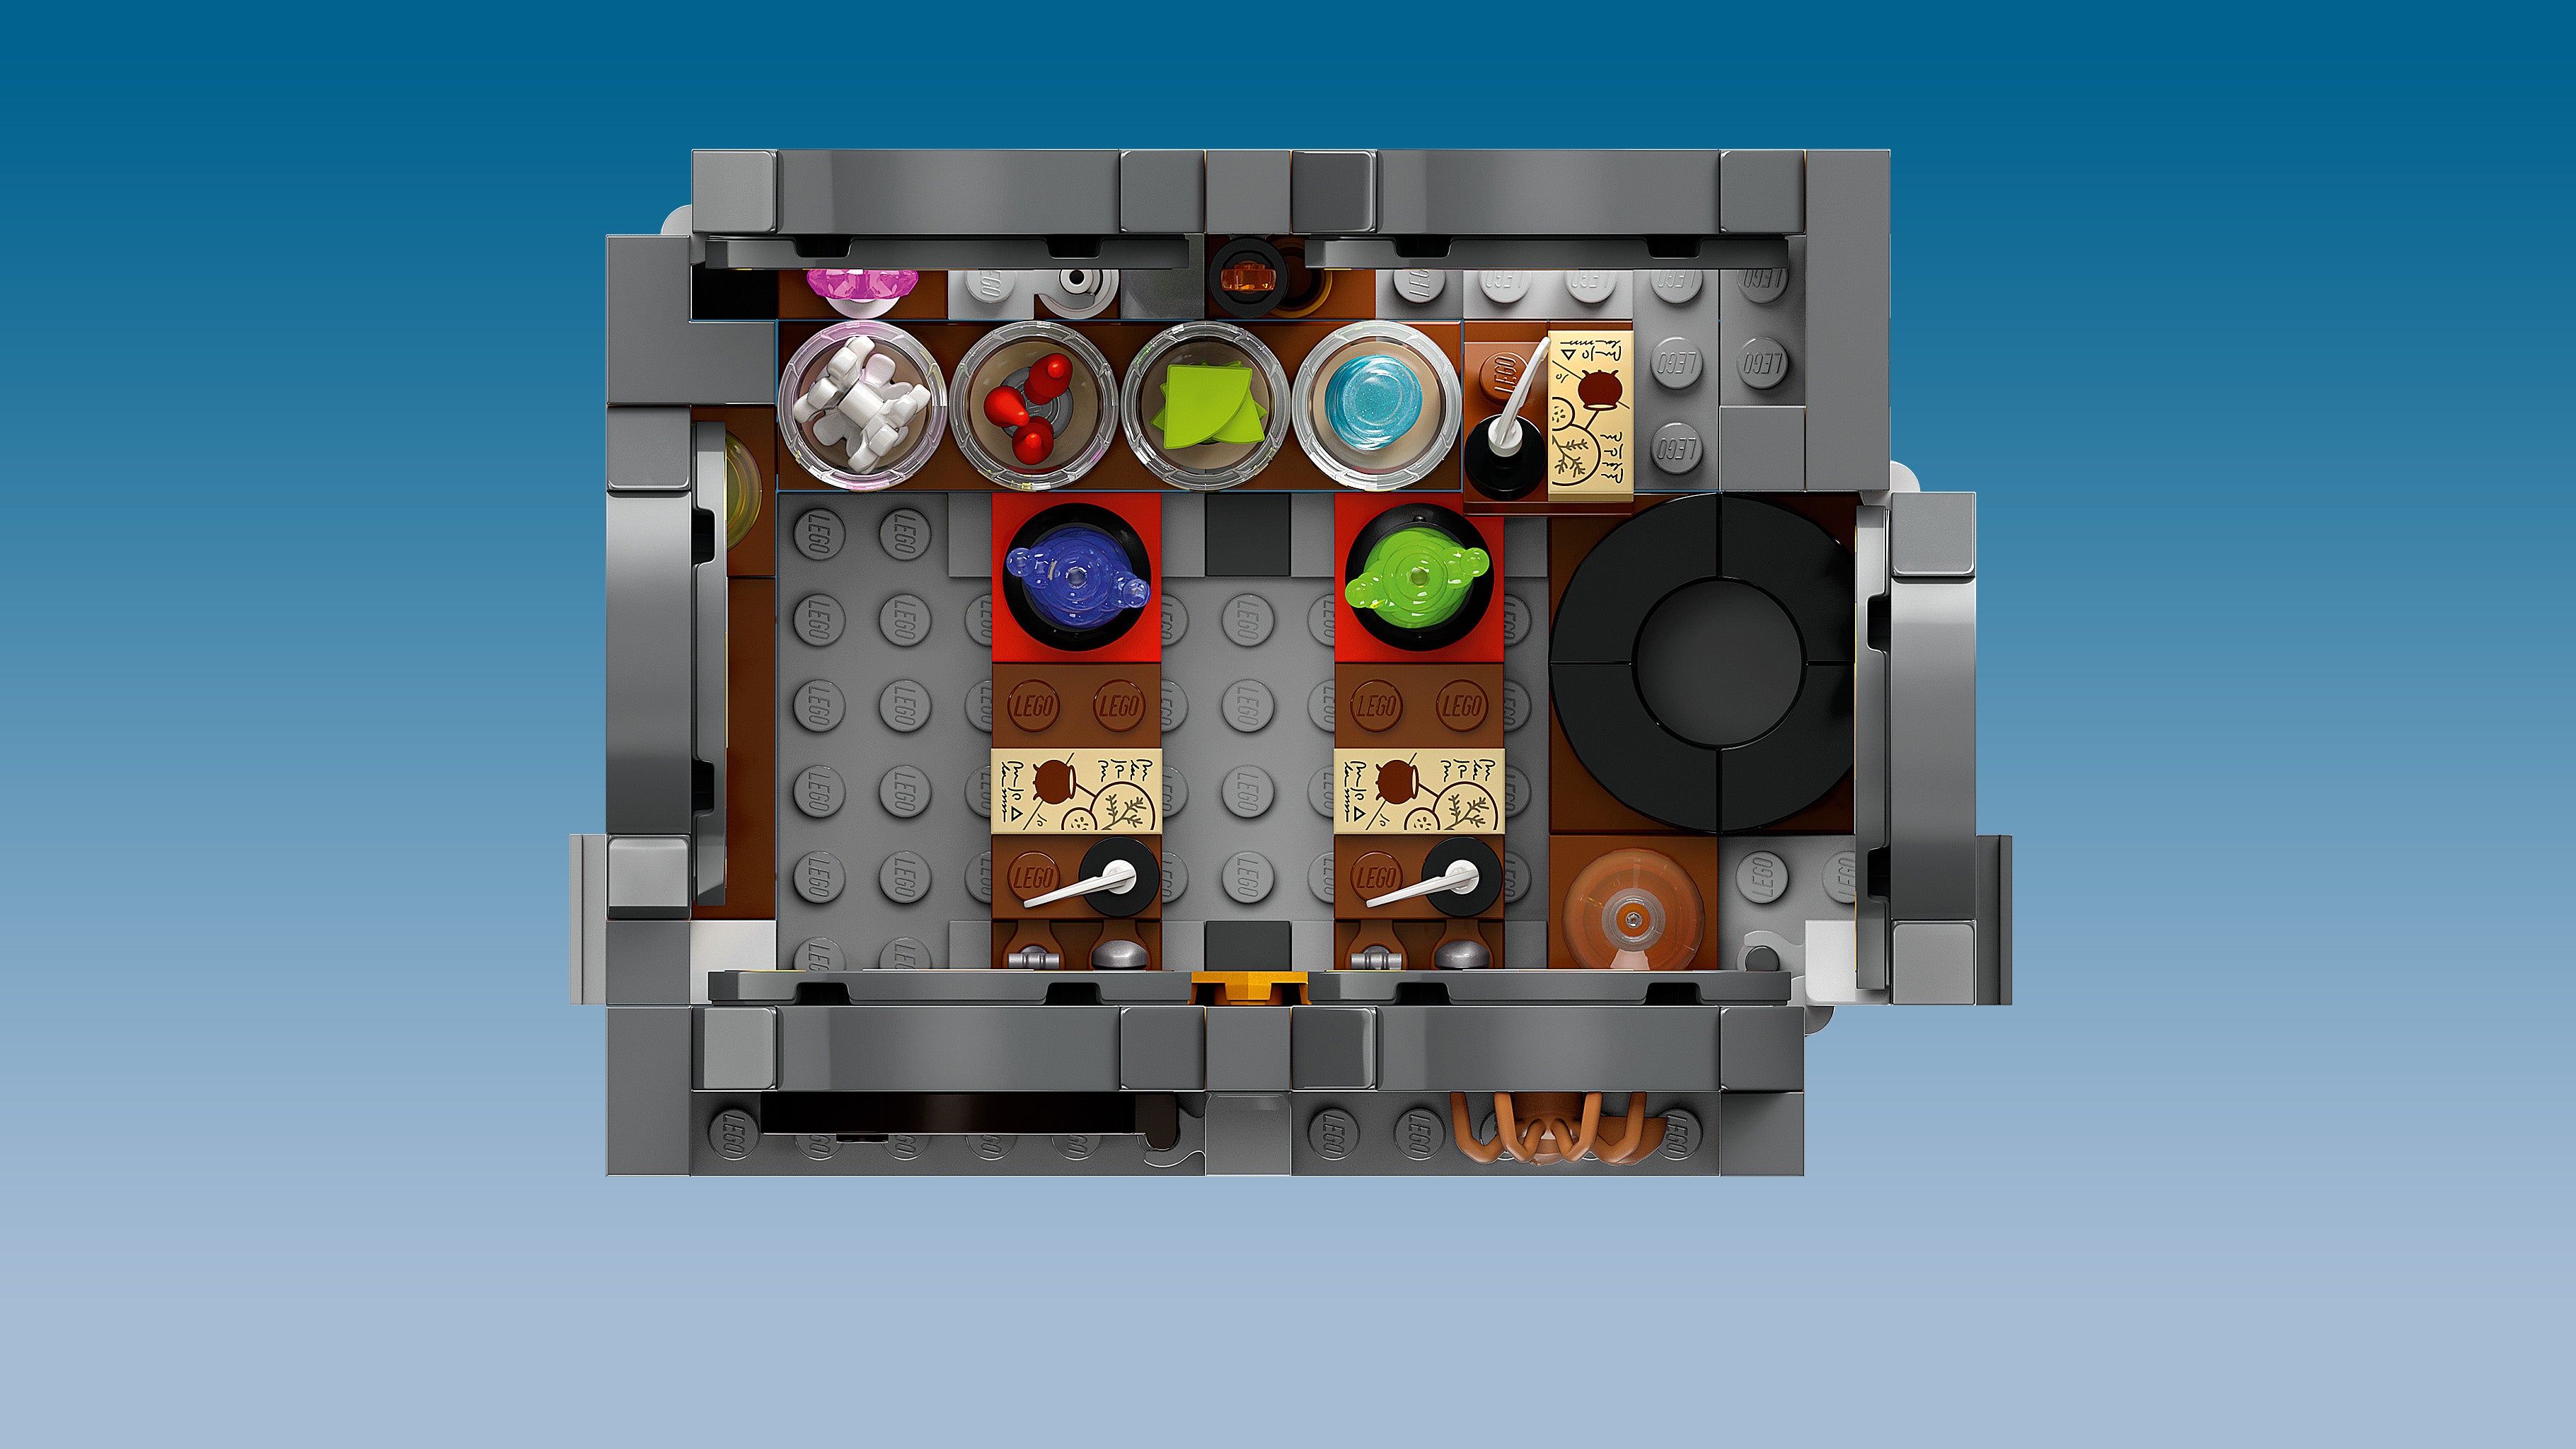 Lego 76431 Hogwarts Castle Potions Class